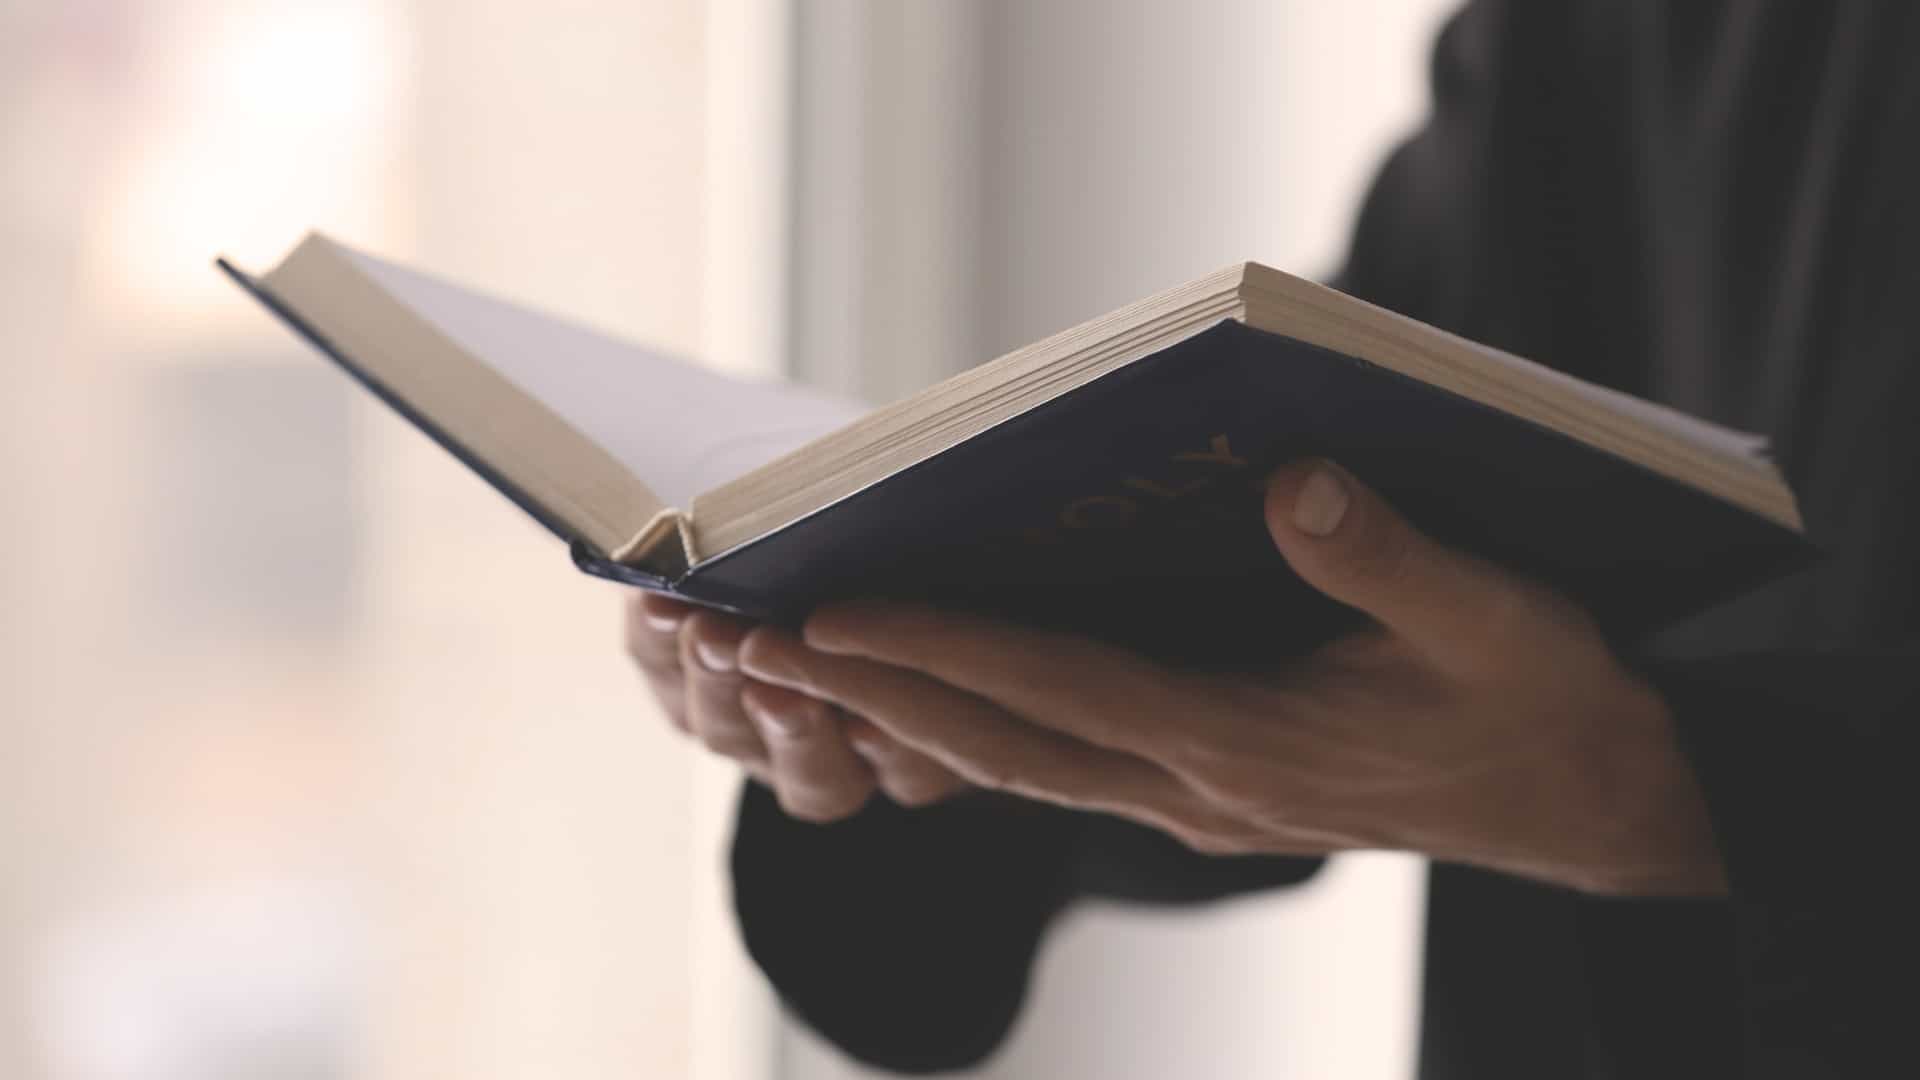 The Public Reading of Scripture